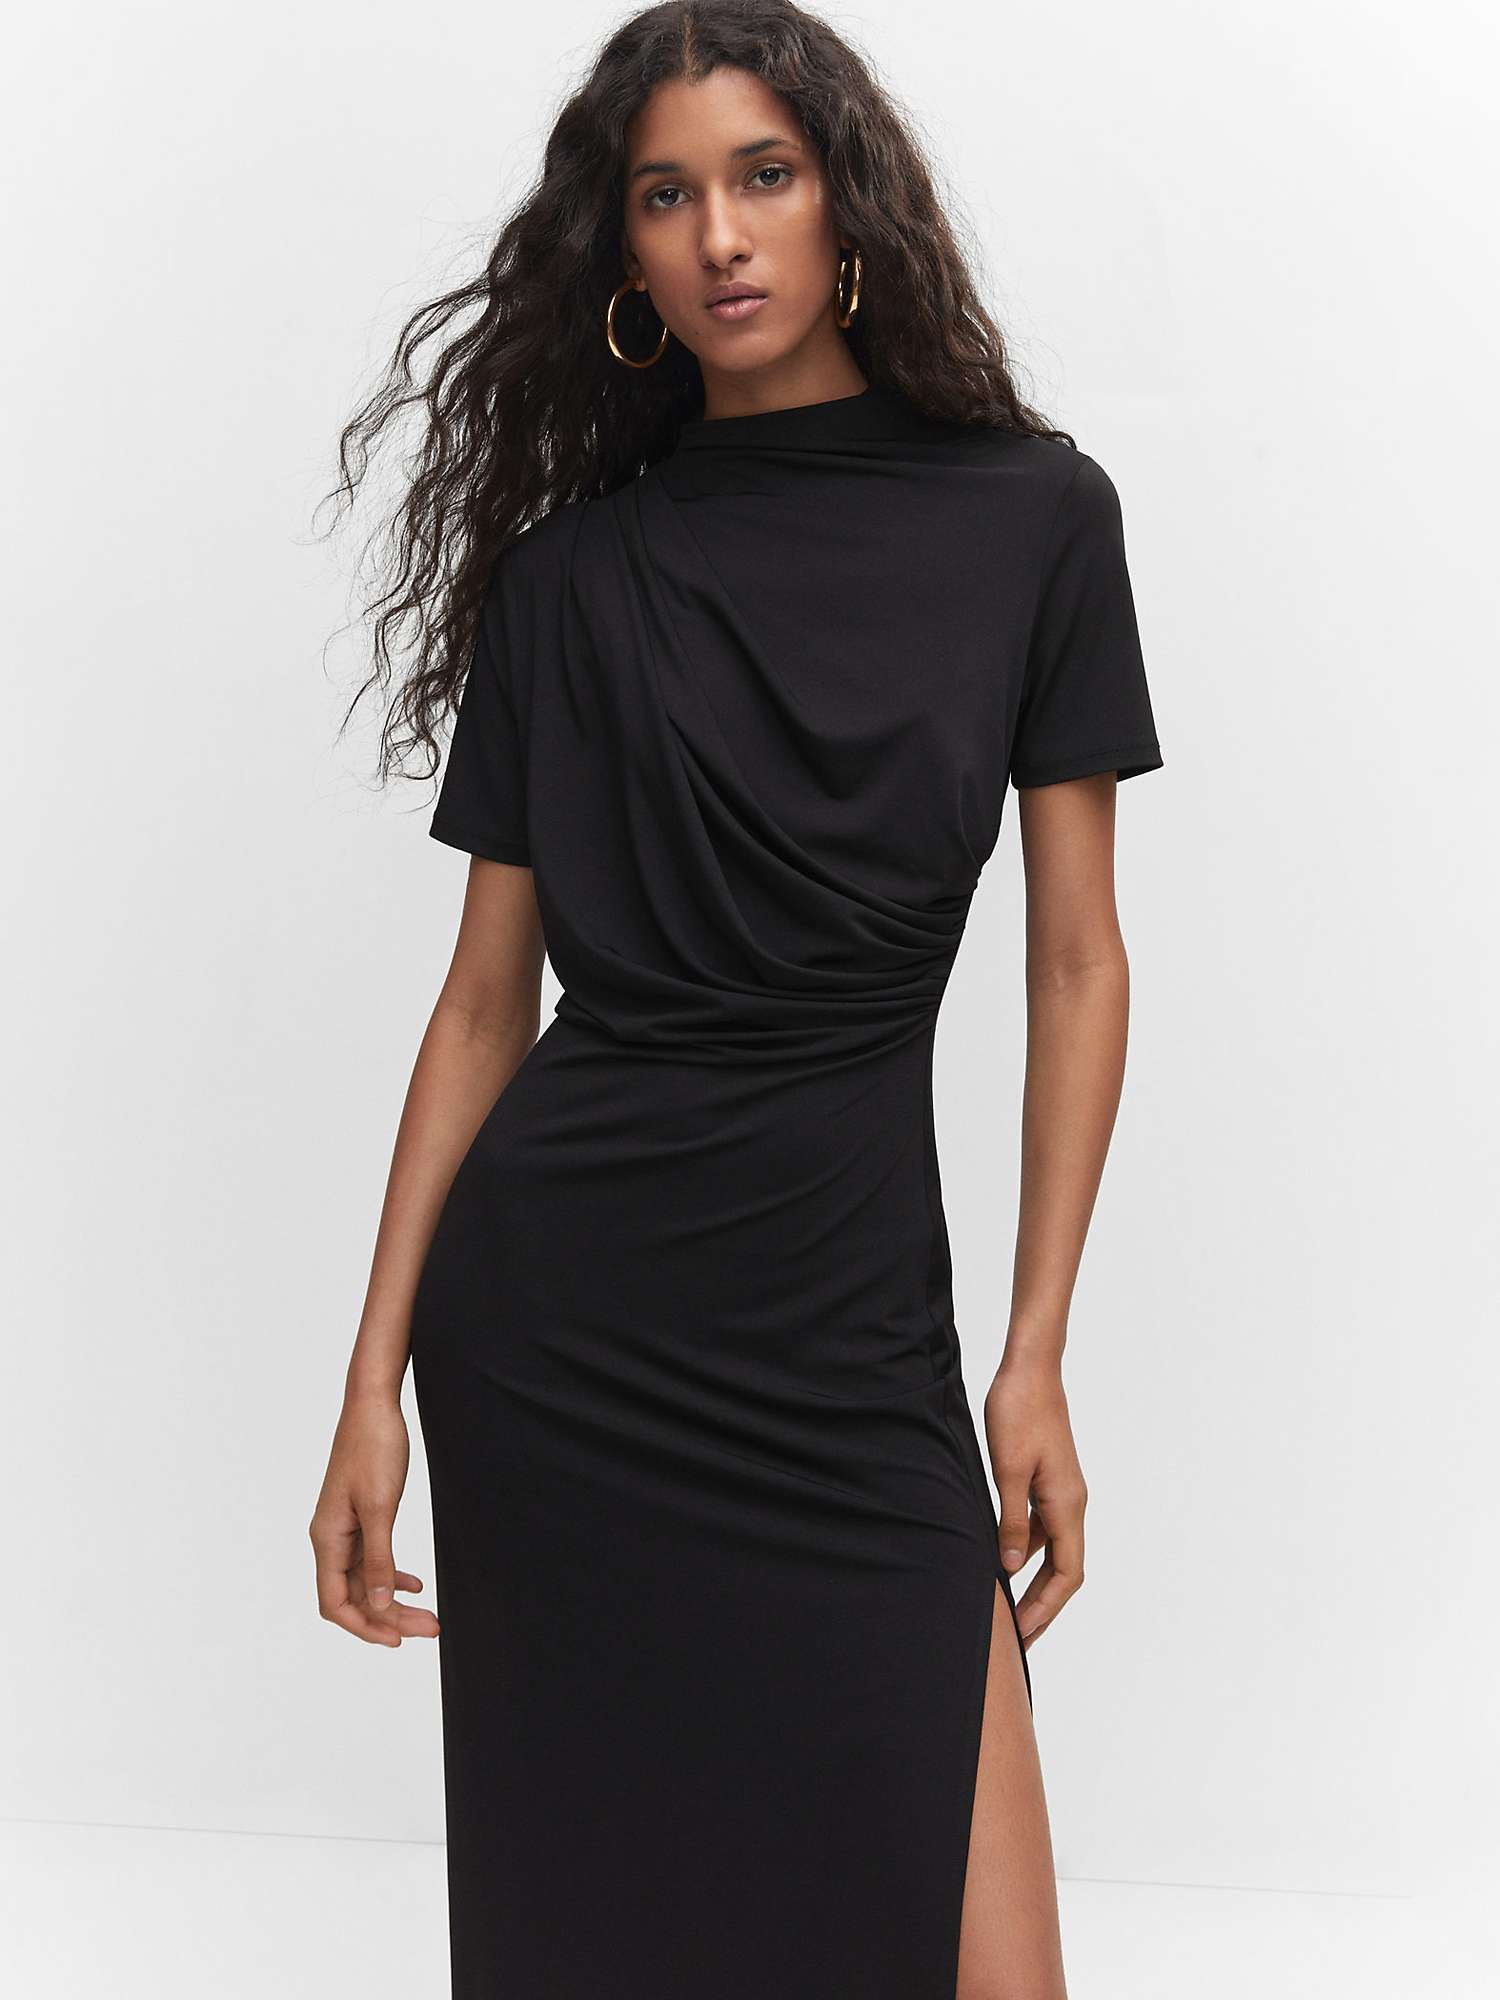 Mango Greco Draped Knitted Dress, Black at John Lewis & Partners